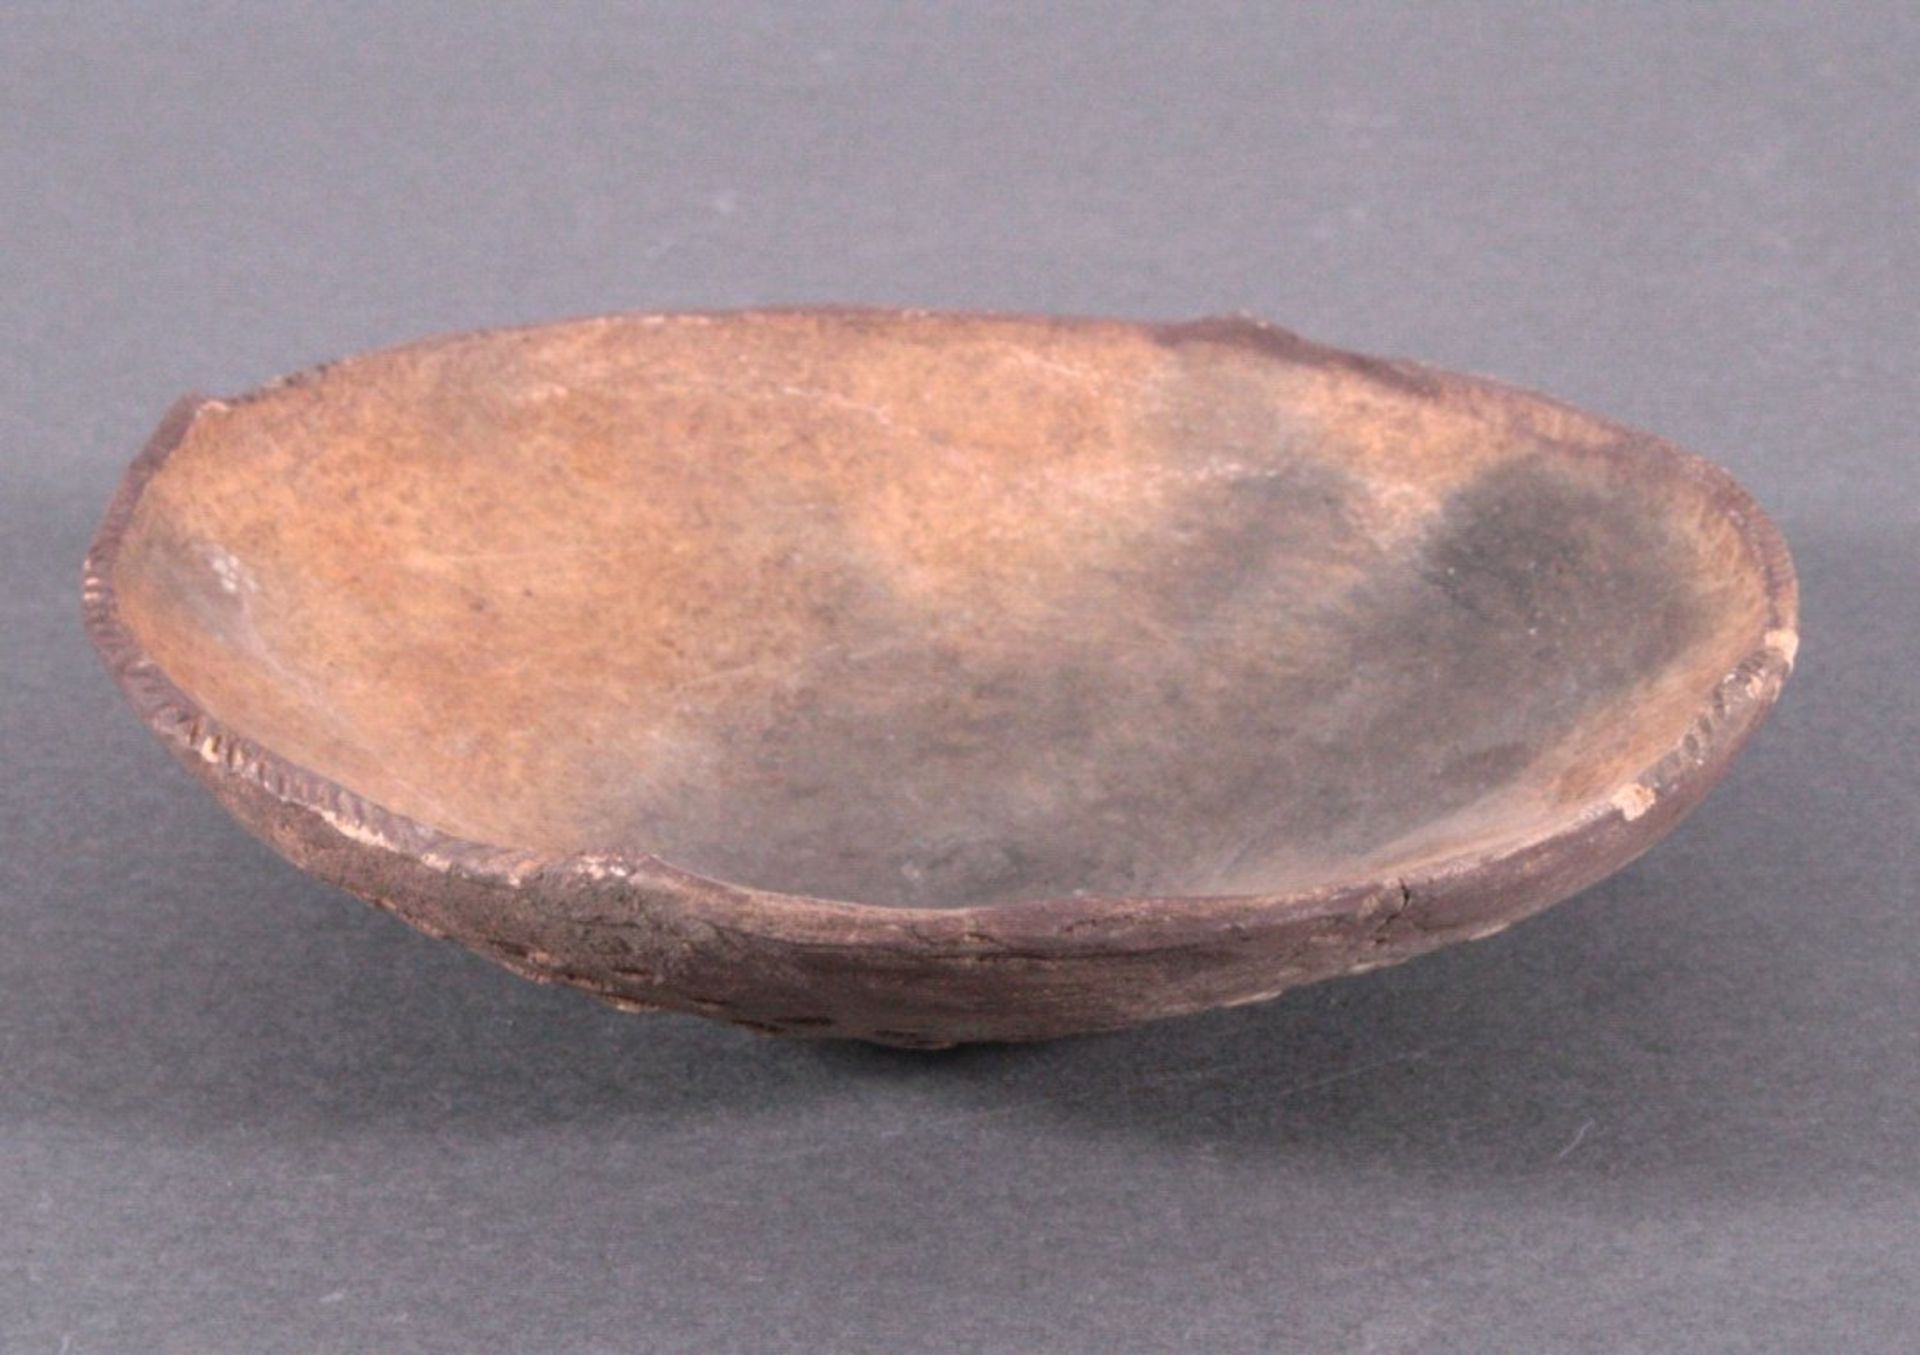 Runde Schale, Lausitzer Kultur - 900- 500 v. Chr.heller Ton, gezipfelter Rand, Rückseite